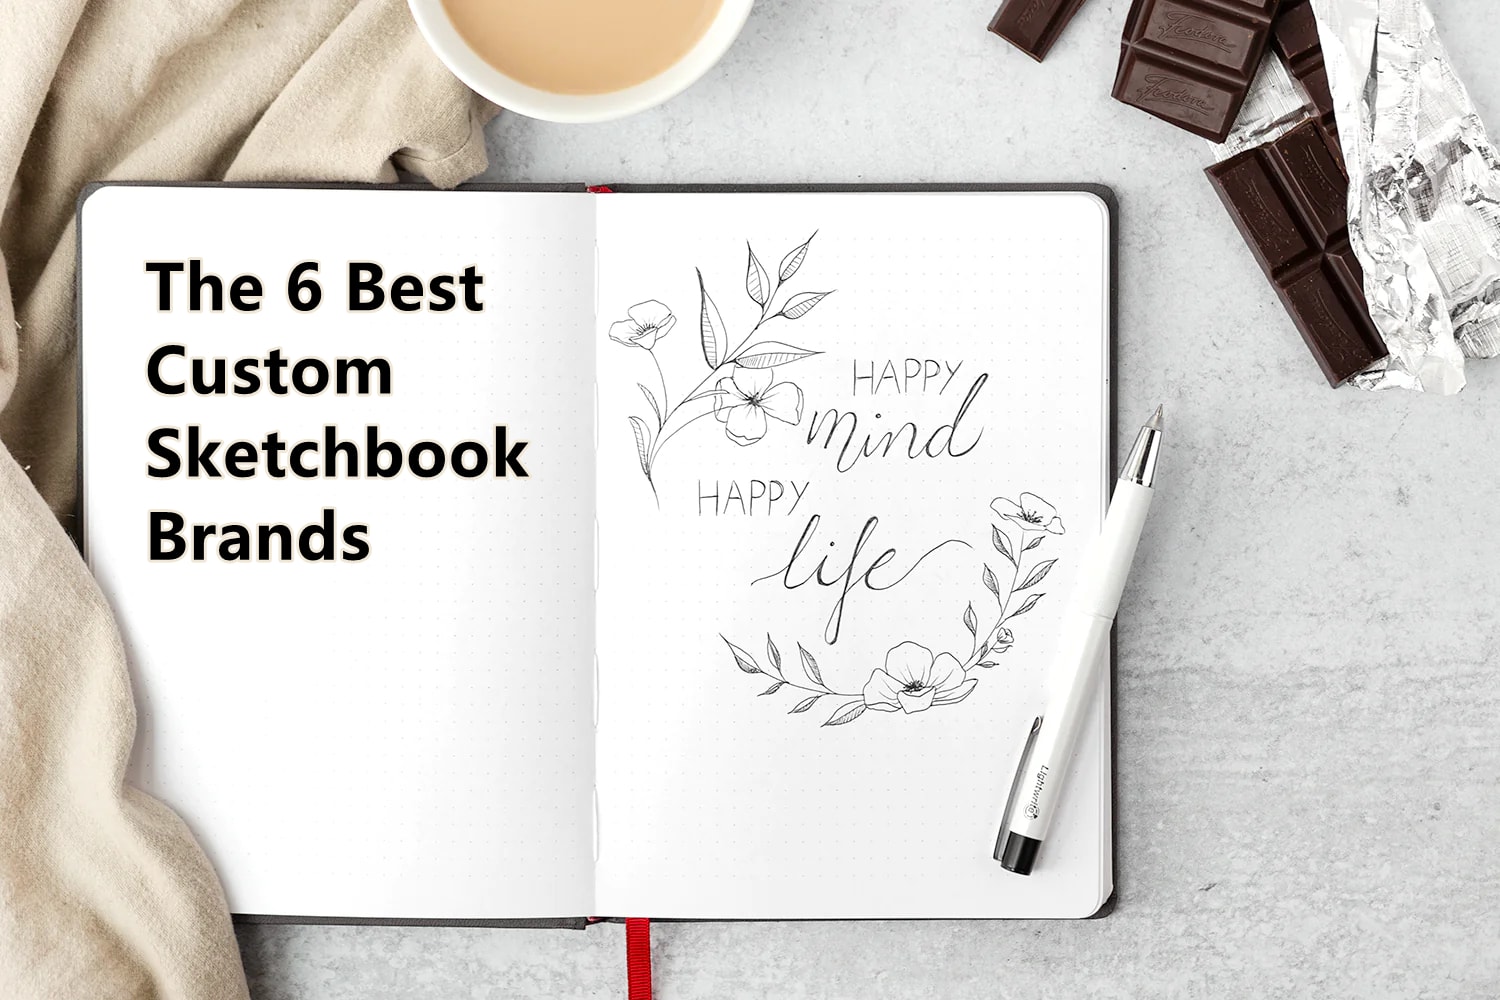 The 6 Best Custom Sketchbook Brands